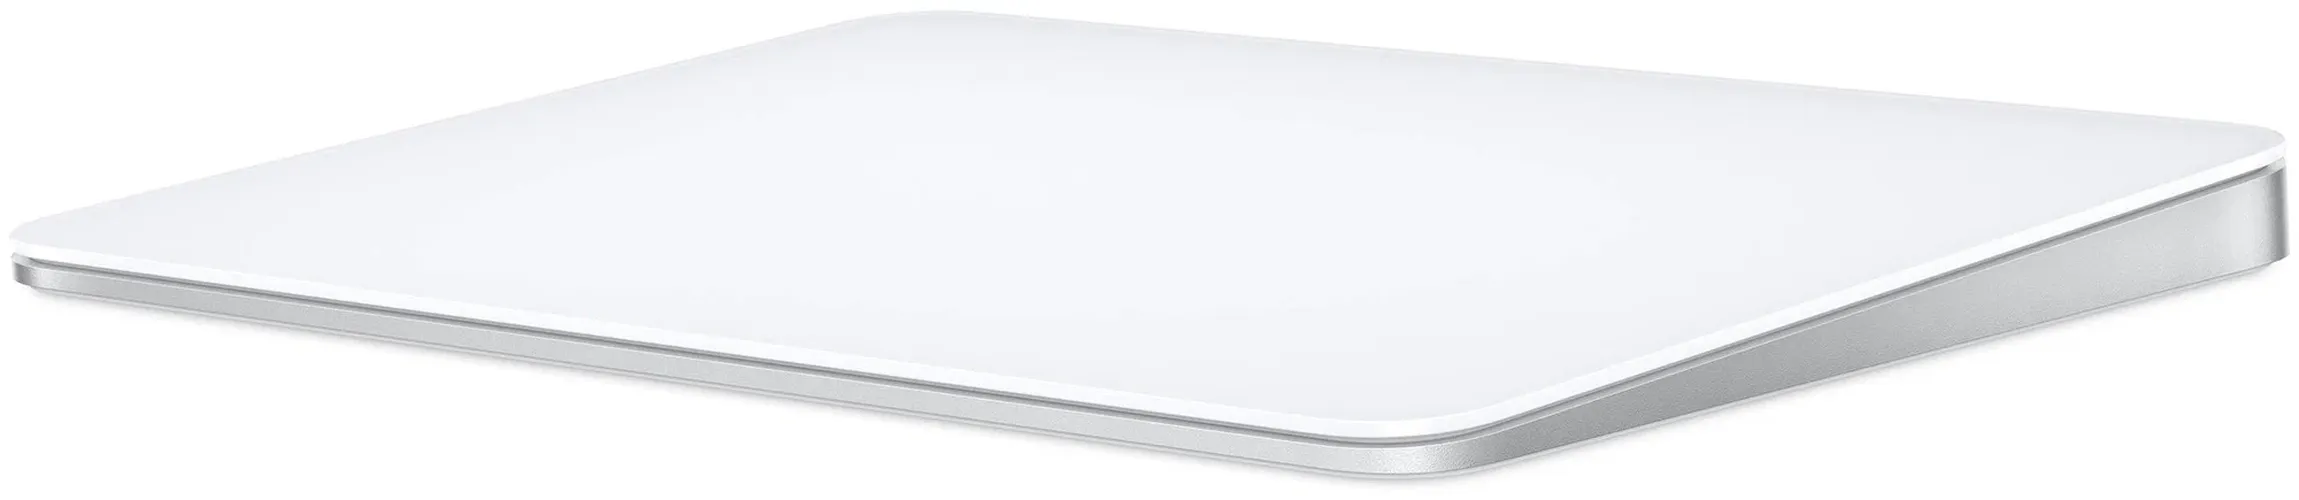 Трекпад Apple Magic Trackpad 3, Серебристый, фото